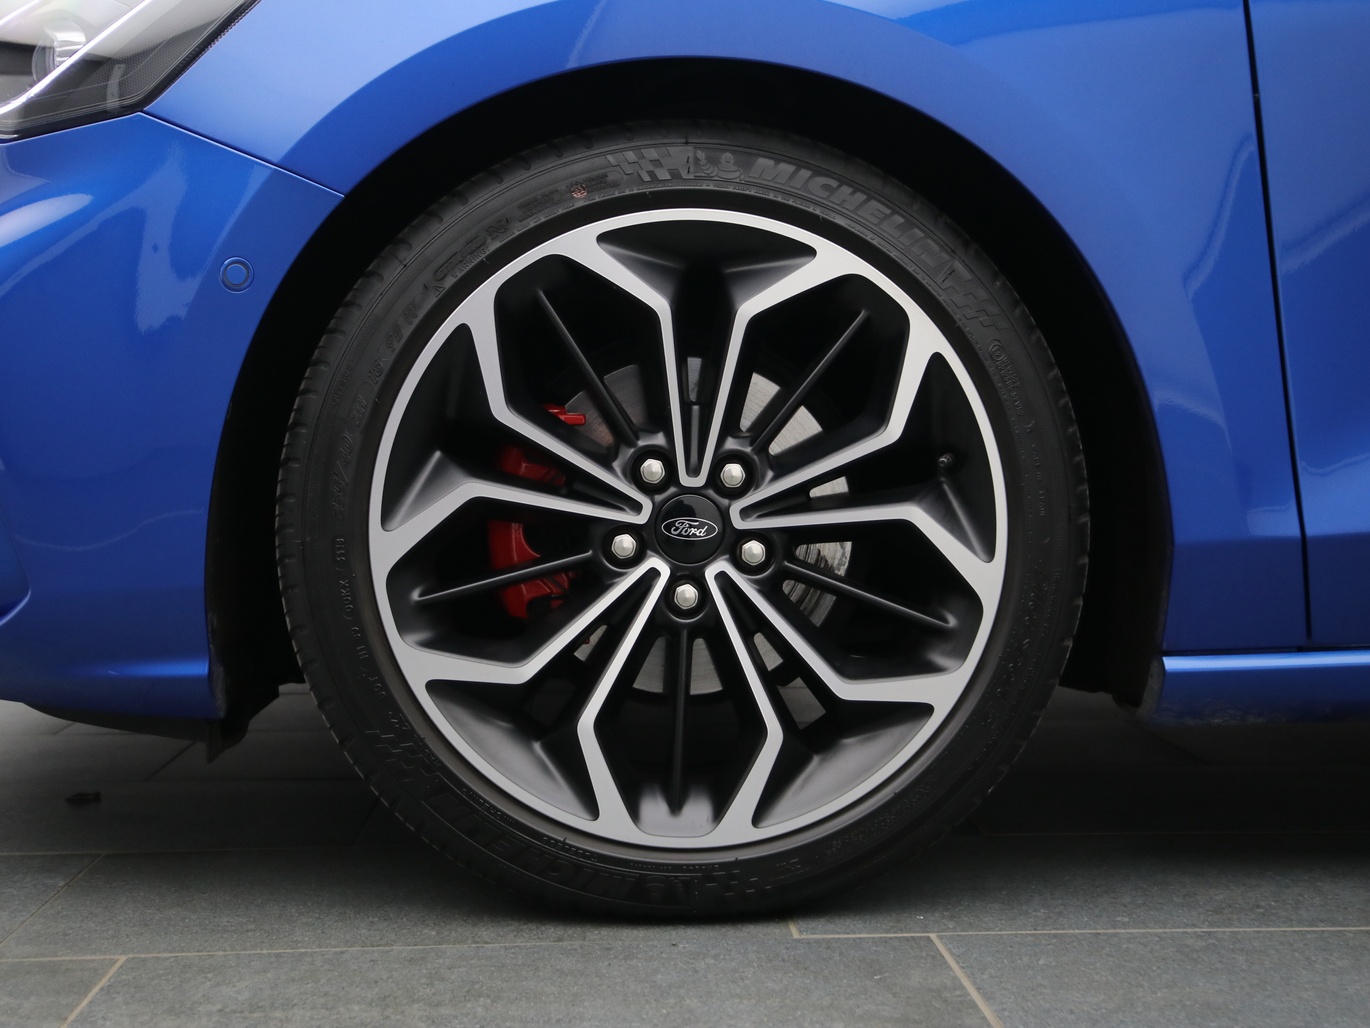  Ford Focus ST-Line 150PS Aut. / Design-P. / Komfort-P. in Dynamic Blau 